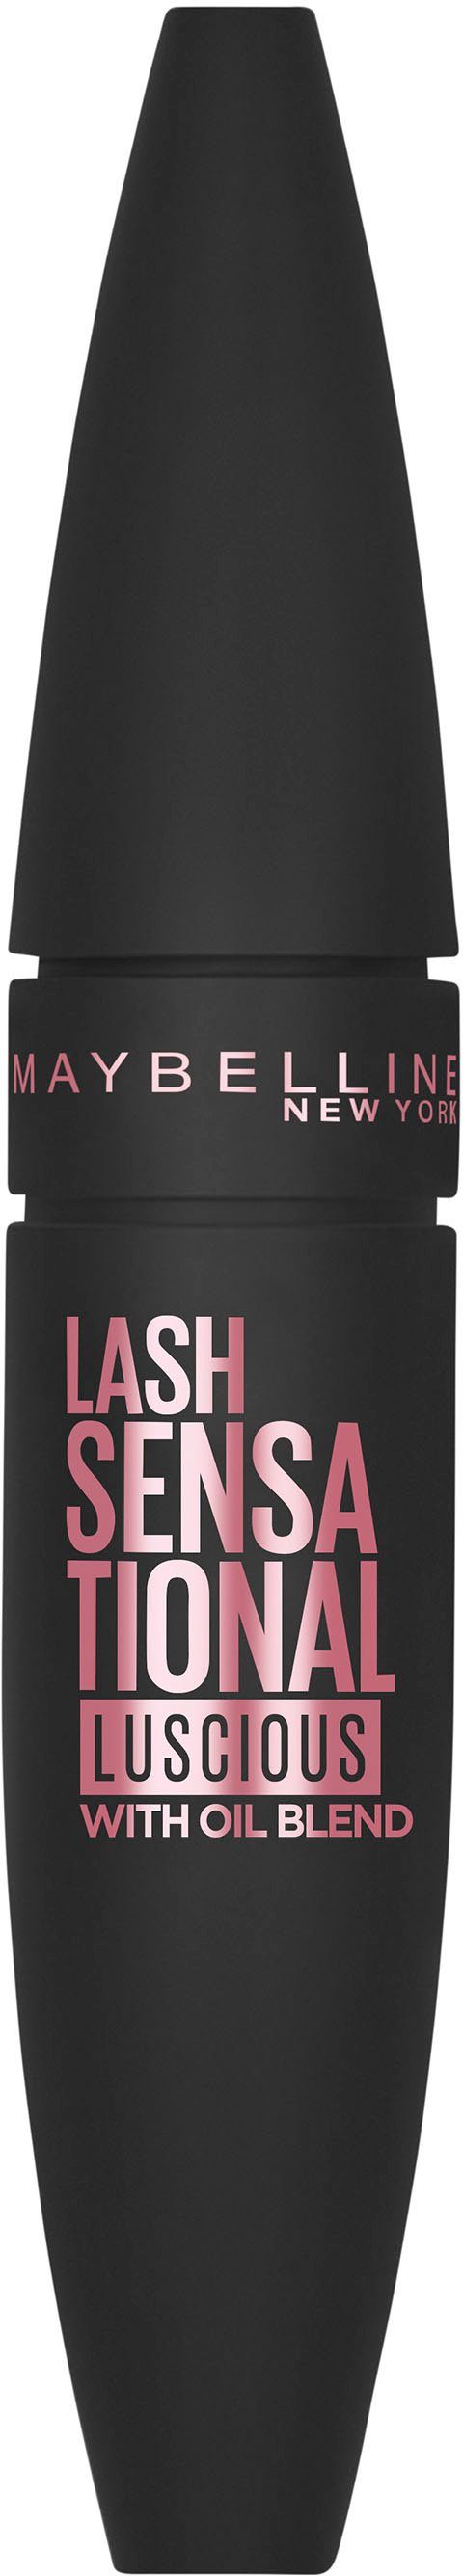 MAYBELLINE NEW Sensational Luscious Mascara Lash YORK